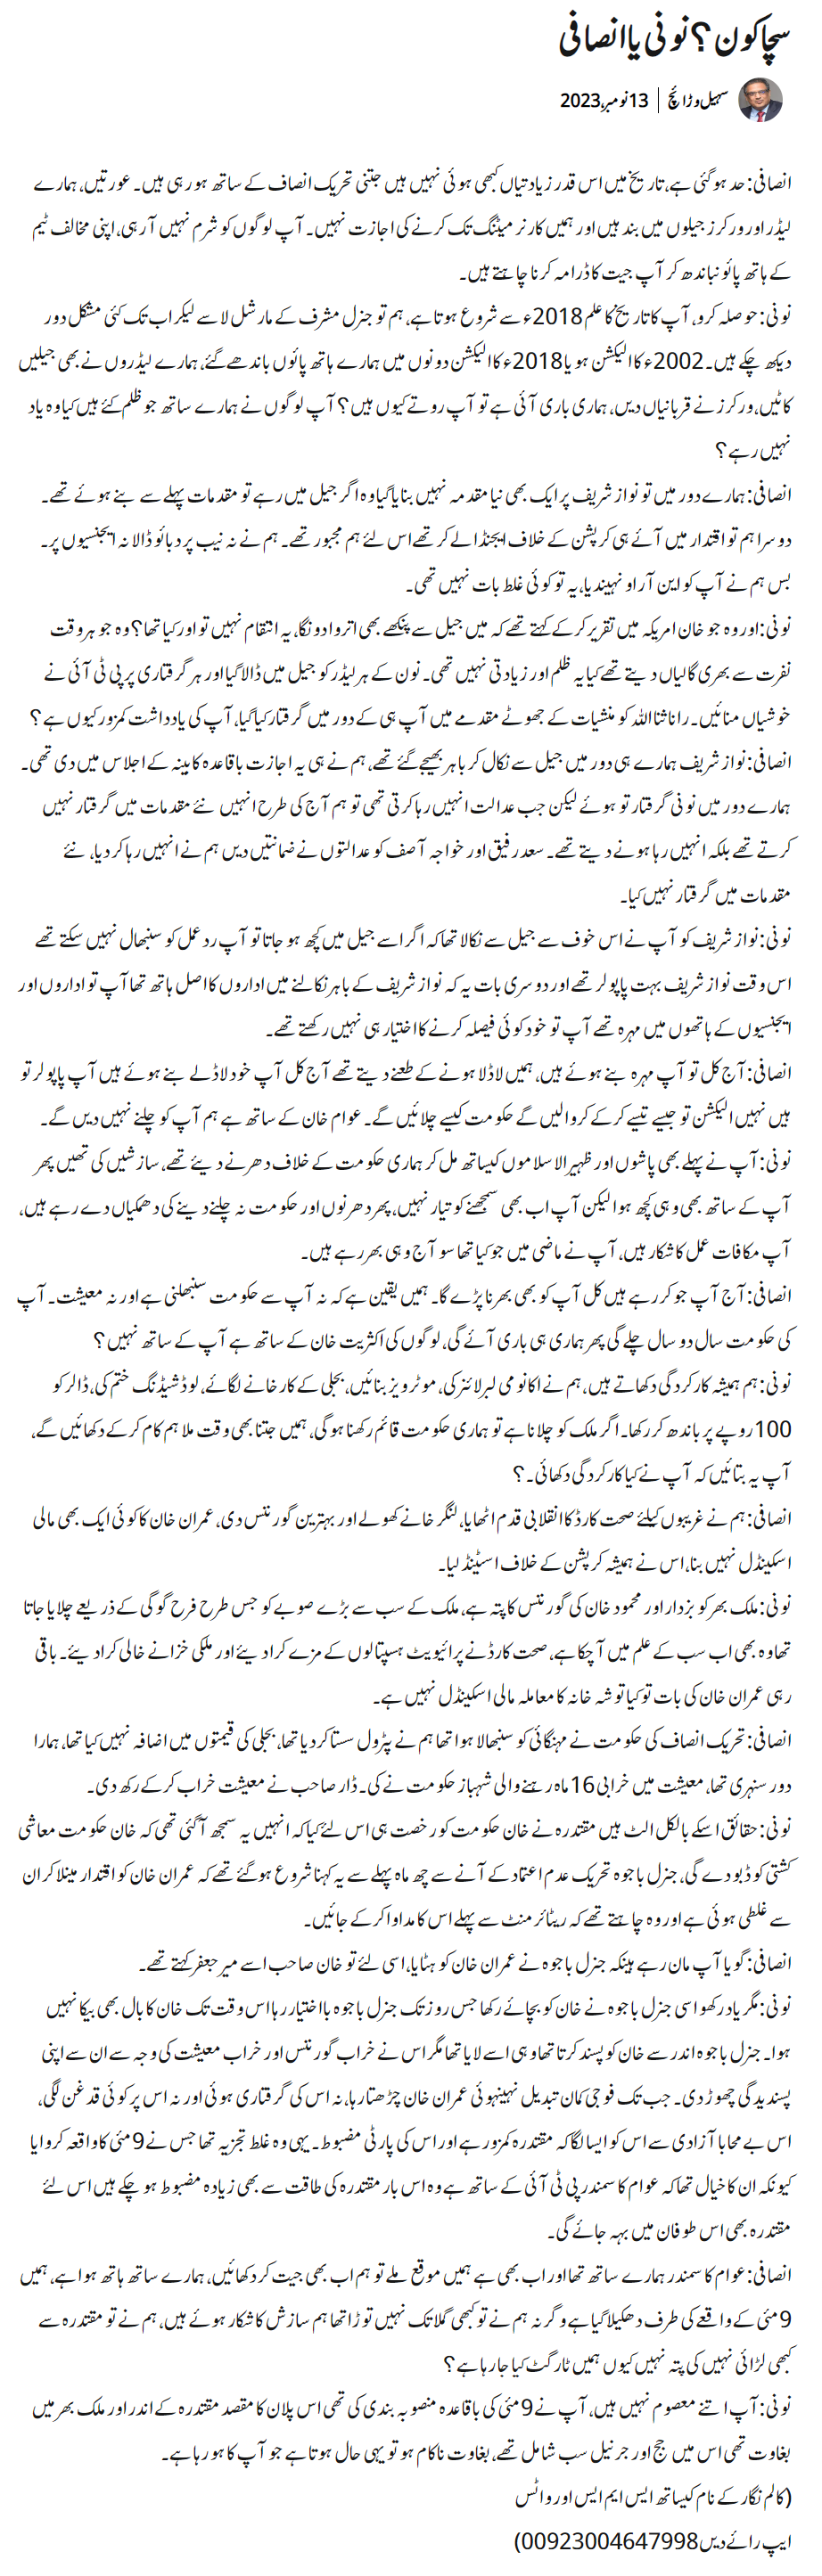 Suhail Warraich Urdu Column About PMLN And PTI Followers